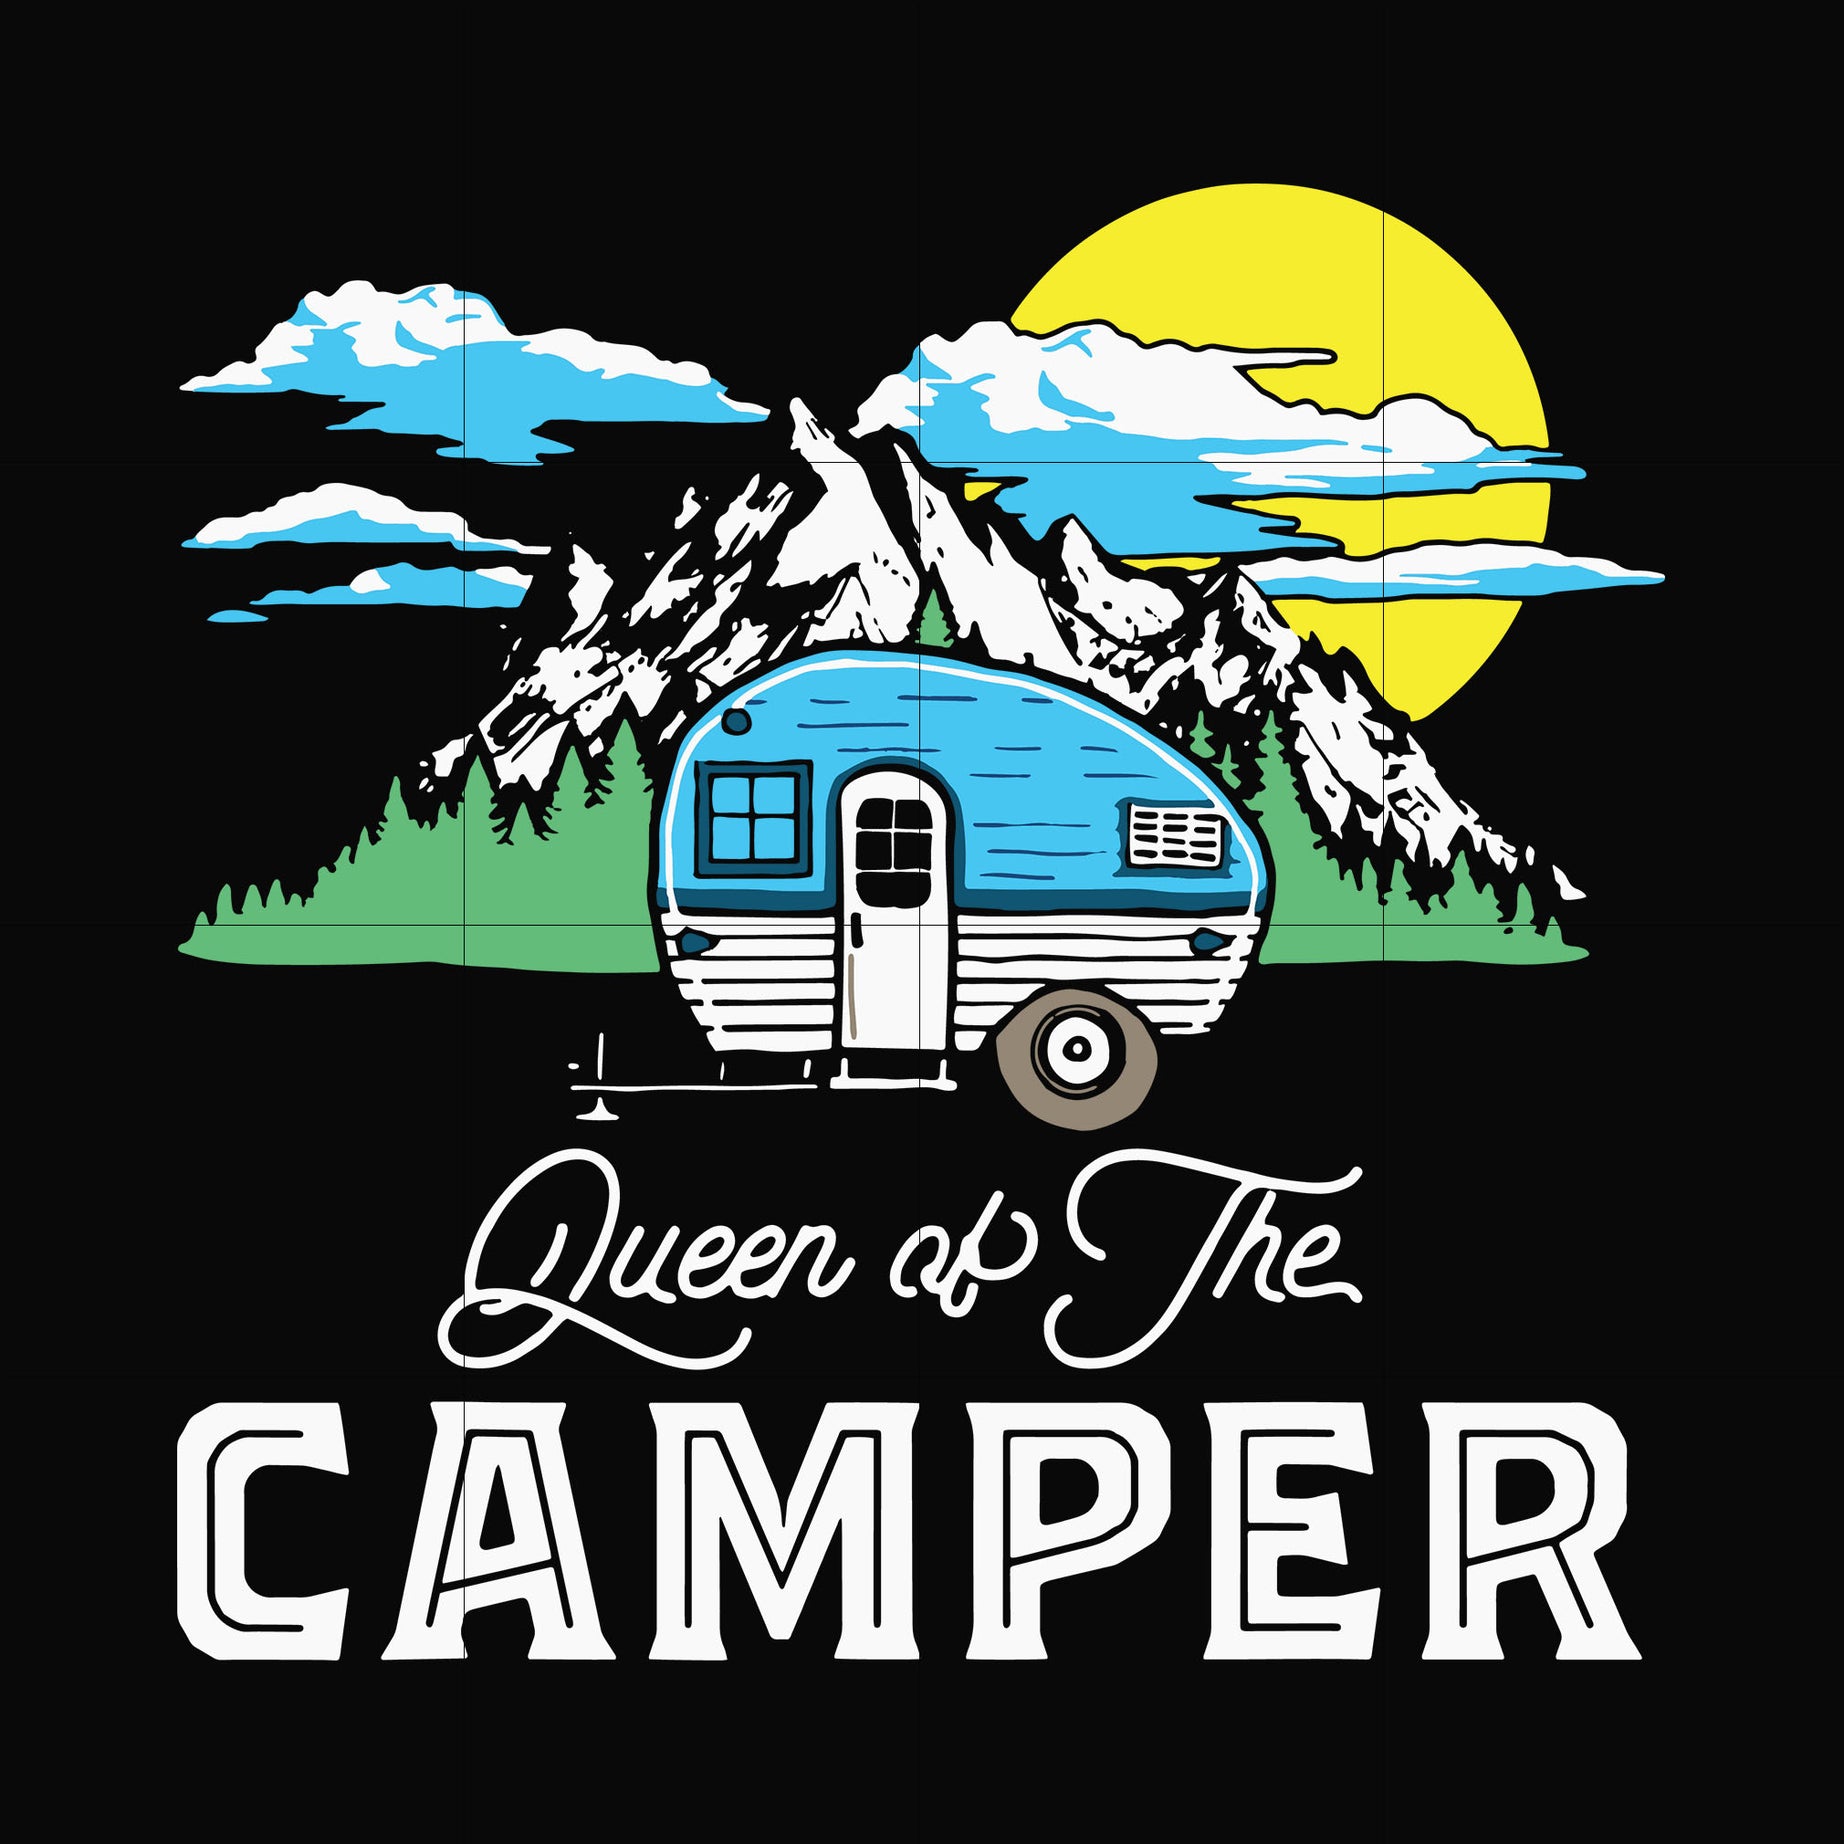 Queen of the camper svg, png, dxf, eps digital file CMP021